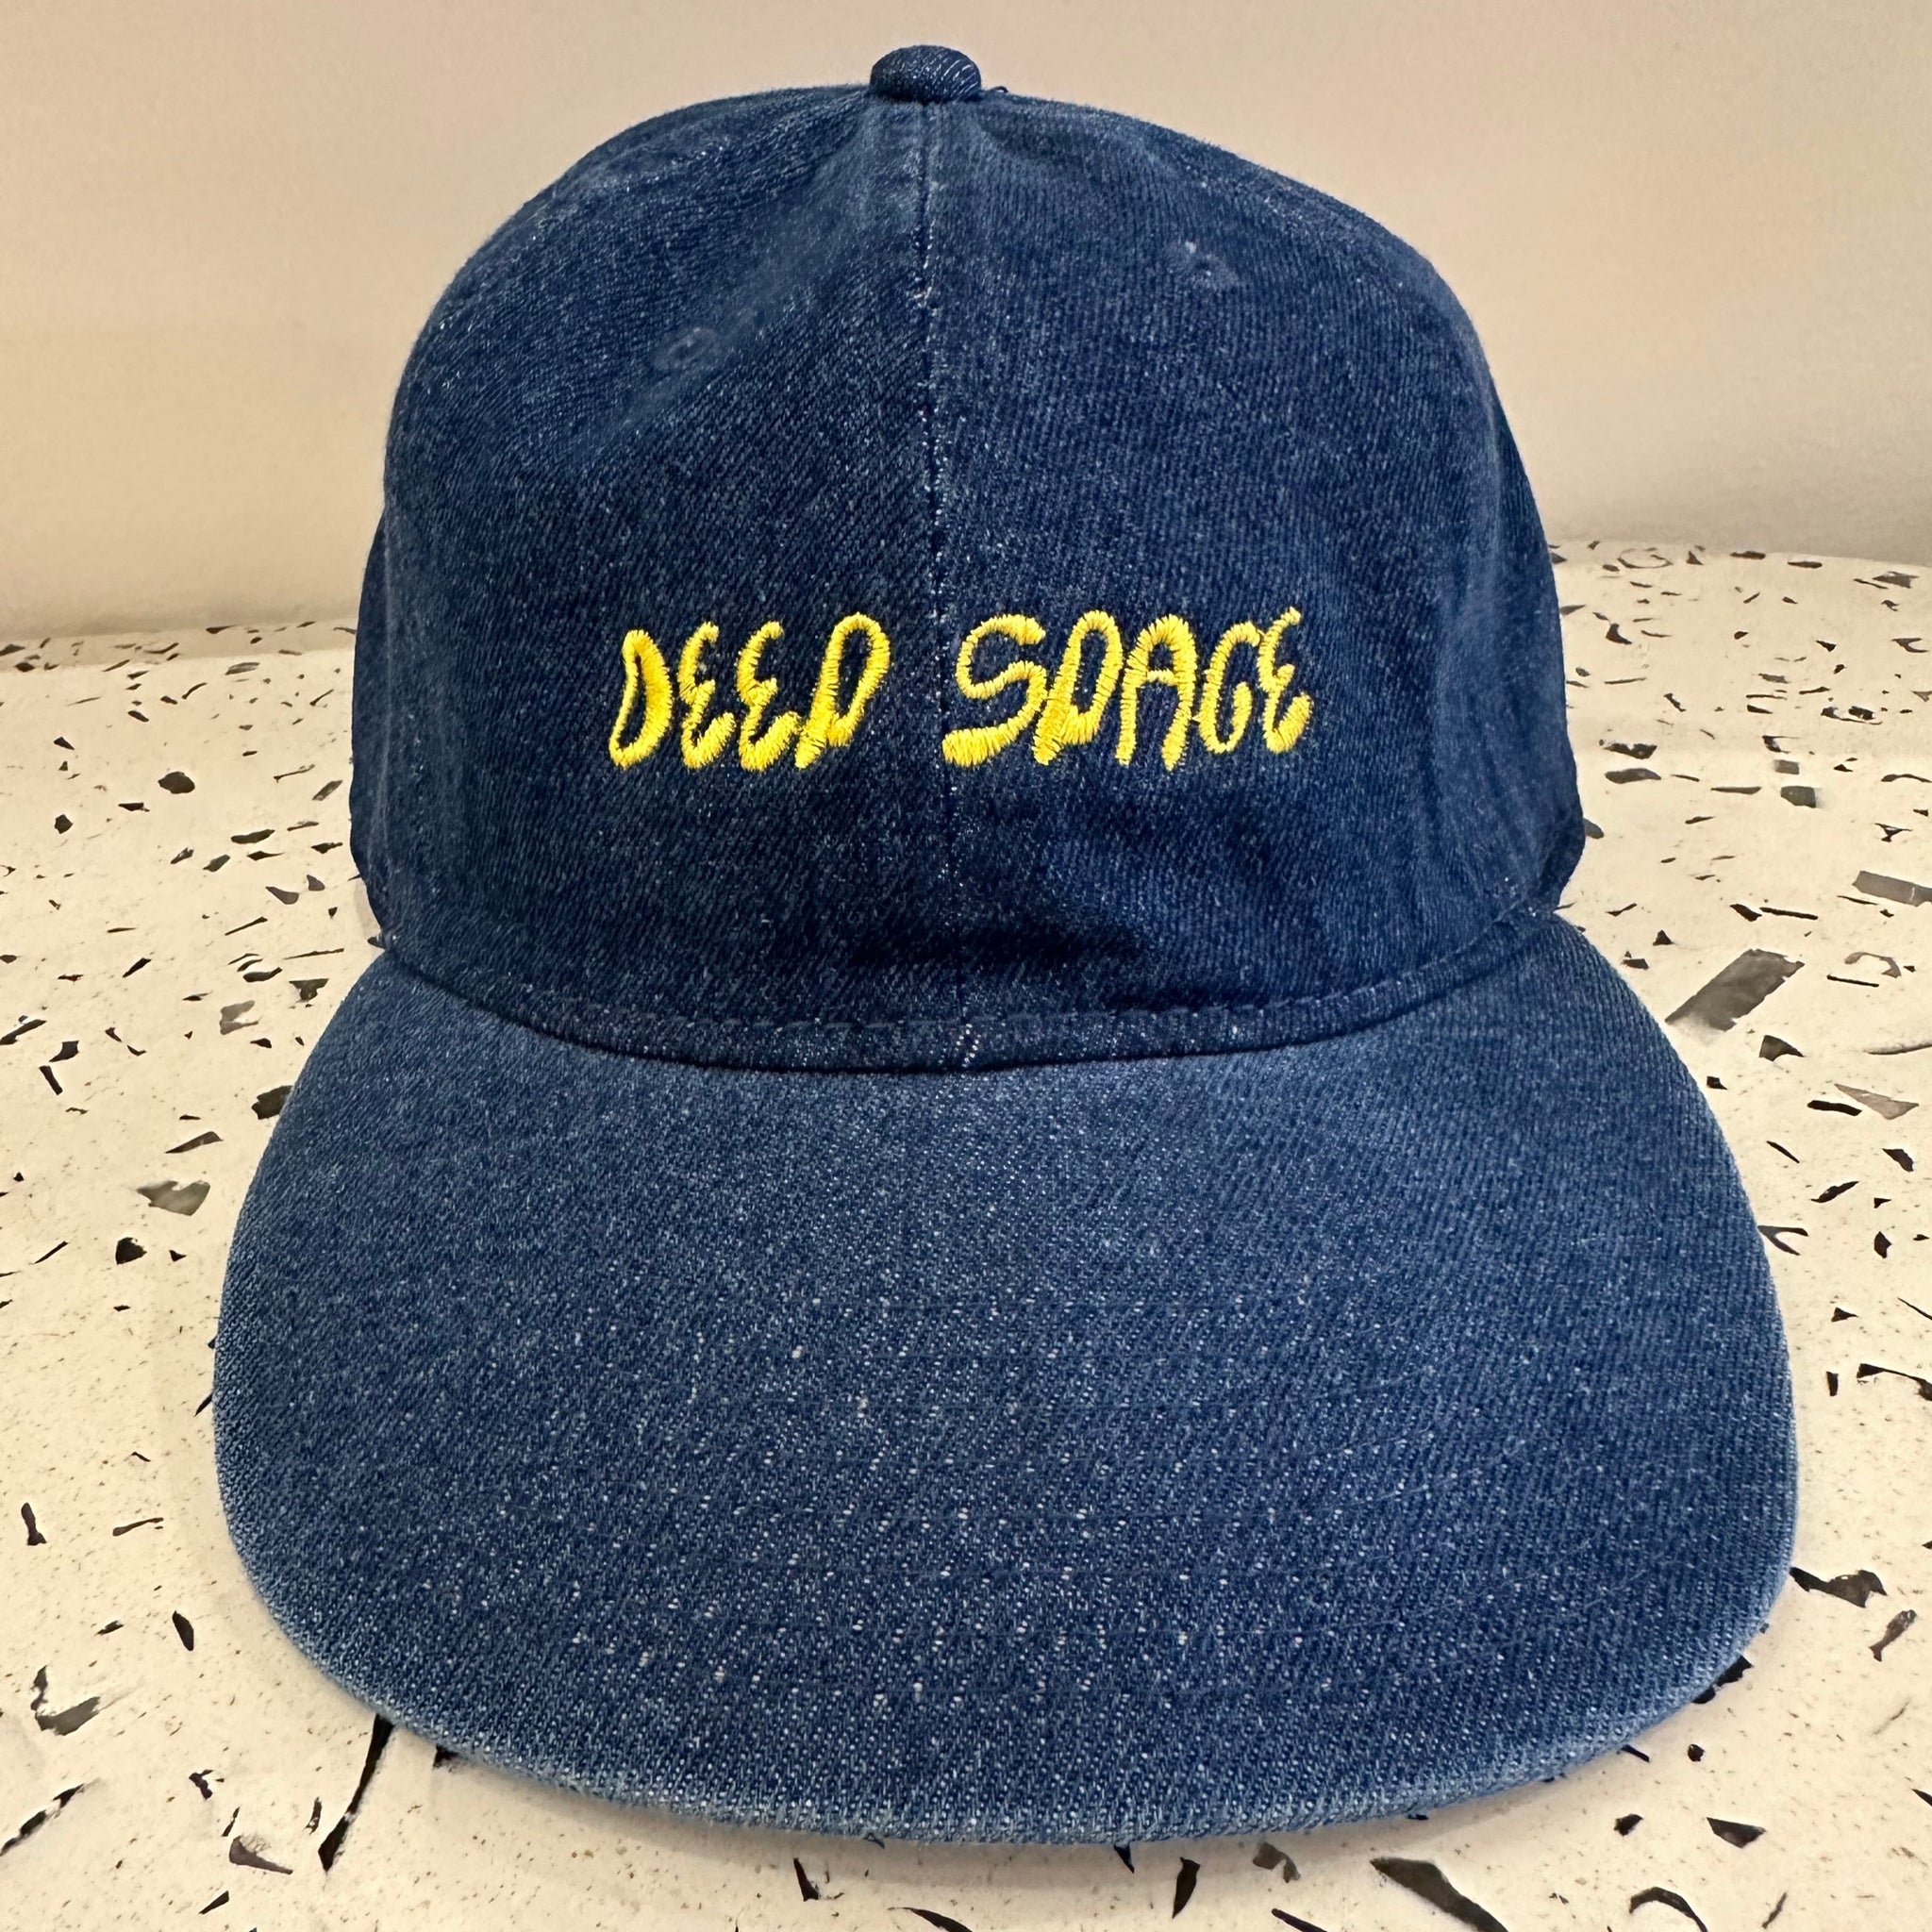 Deep Space Hat